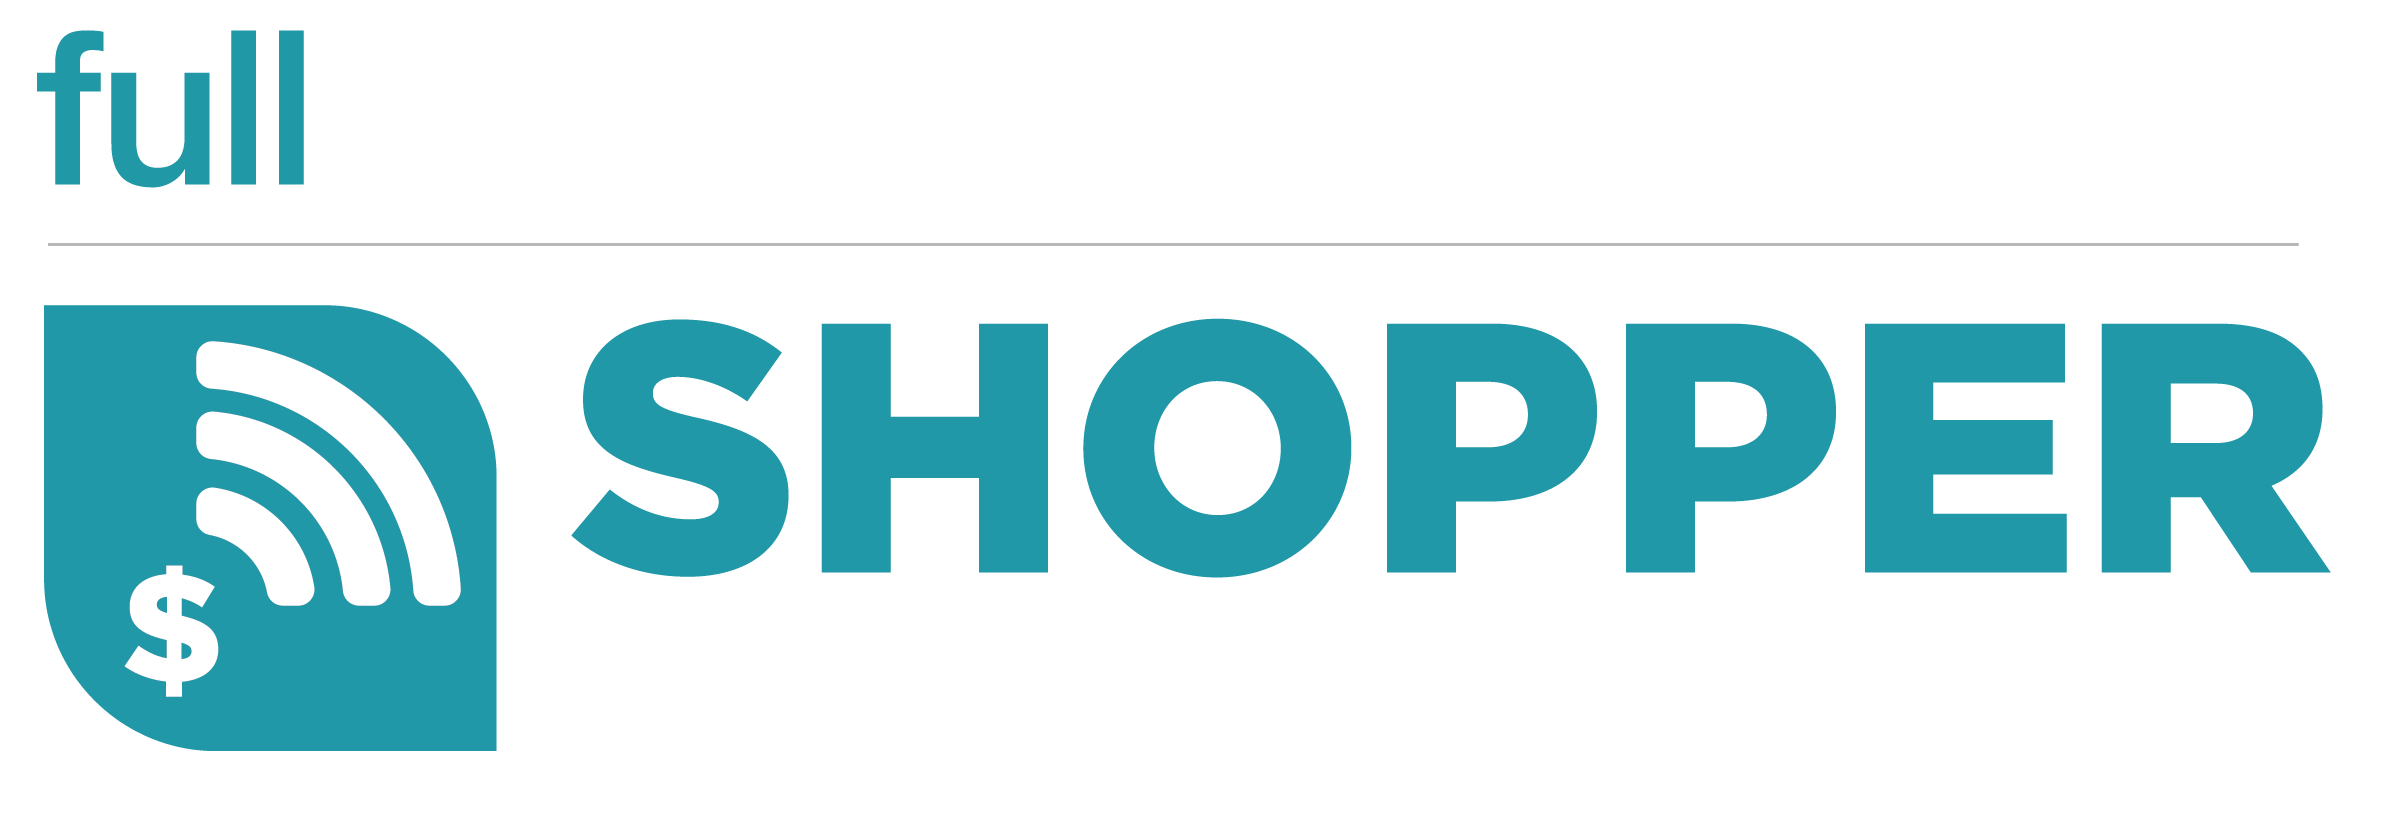 fullthrottle.ai ShopperSuite Logo Inverse